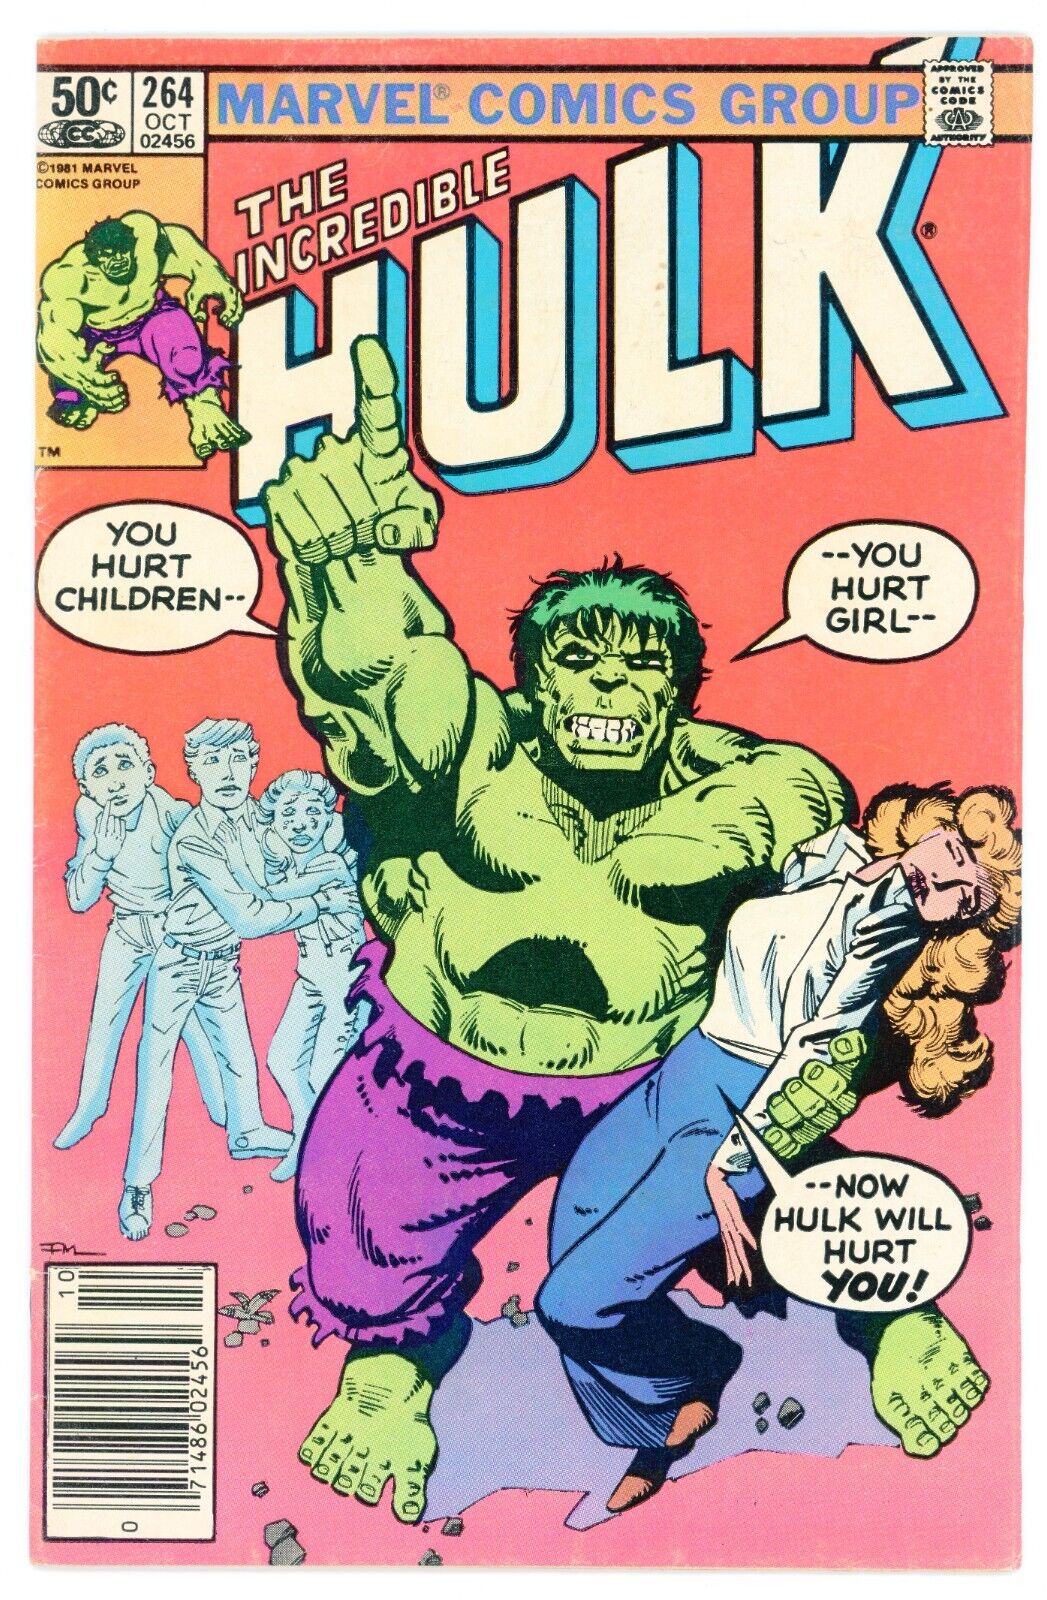 The Incredible Hulk #264 Marvel Comics 1981